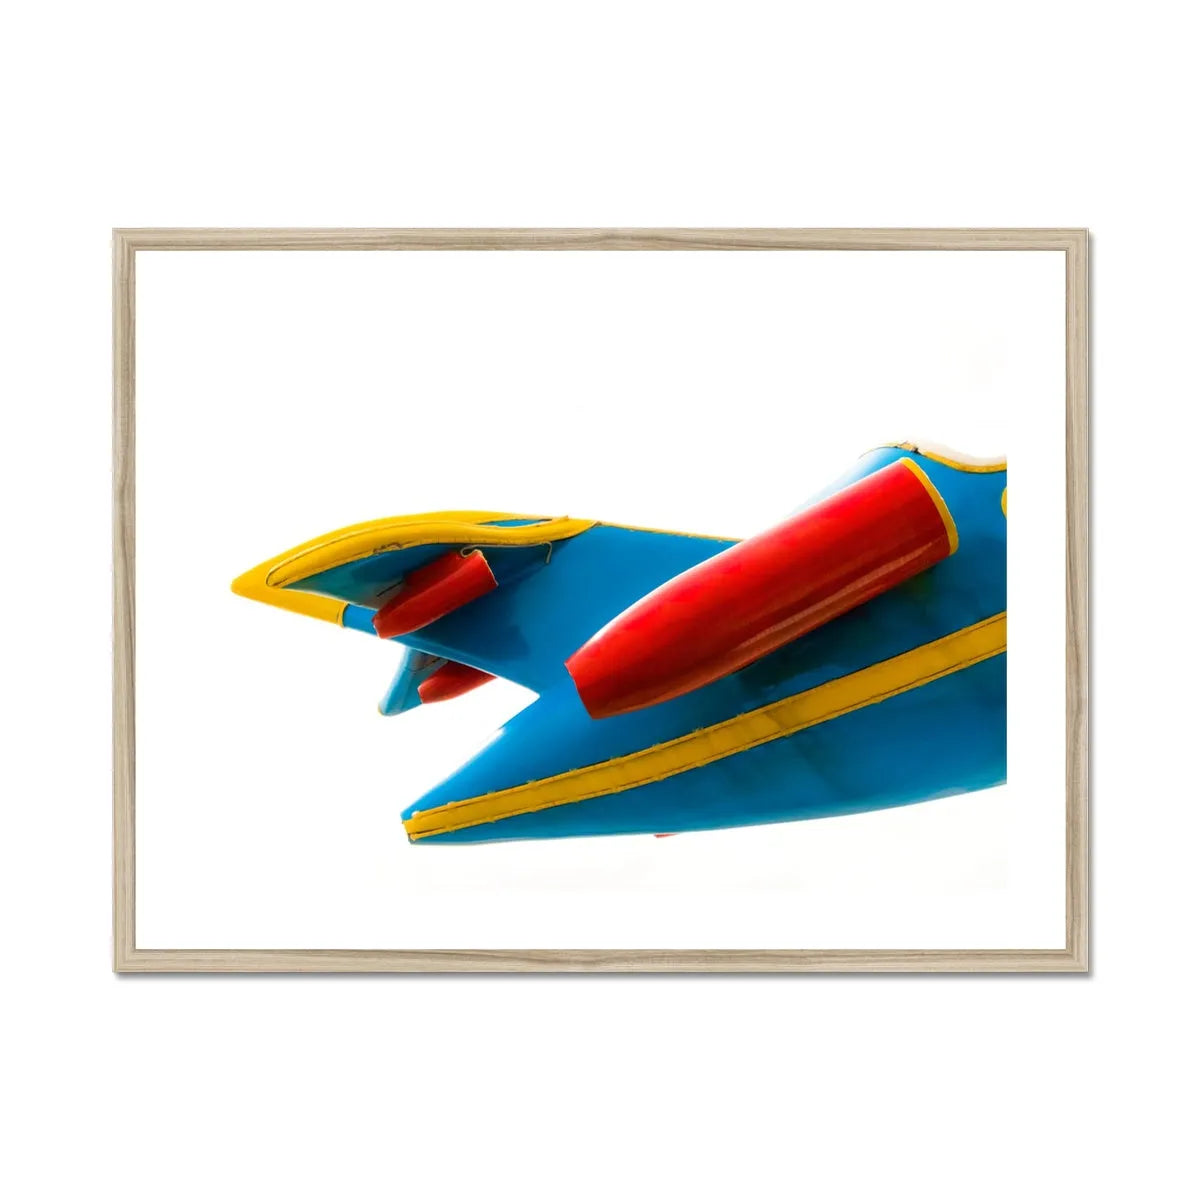 Flying Higher Framed & Mounted Print - 32’x24’ / Natural Frame - Posters Prints & Visual Artwork - Aesthetic Art